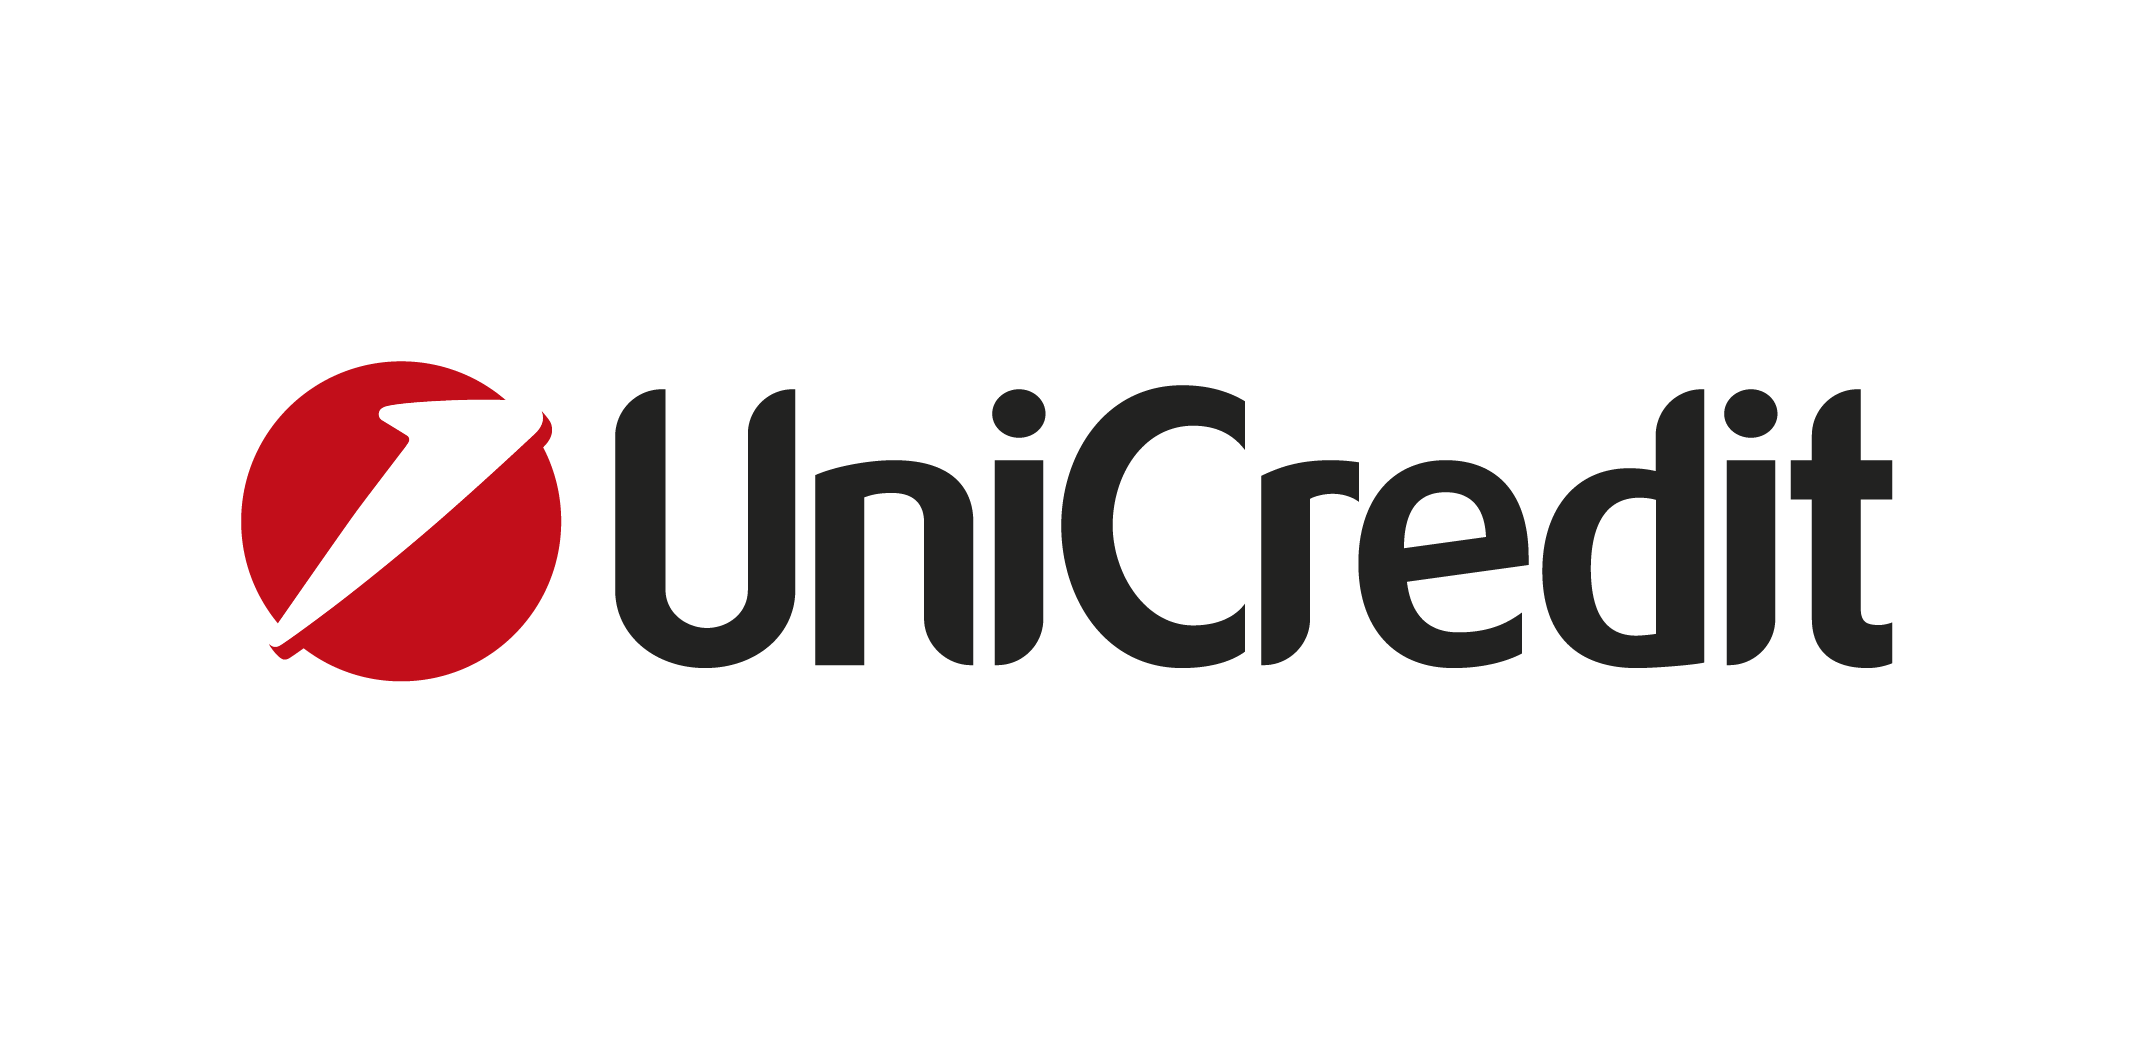 UniCredit